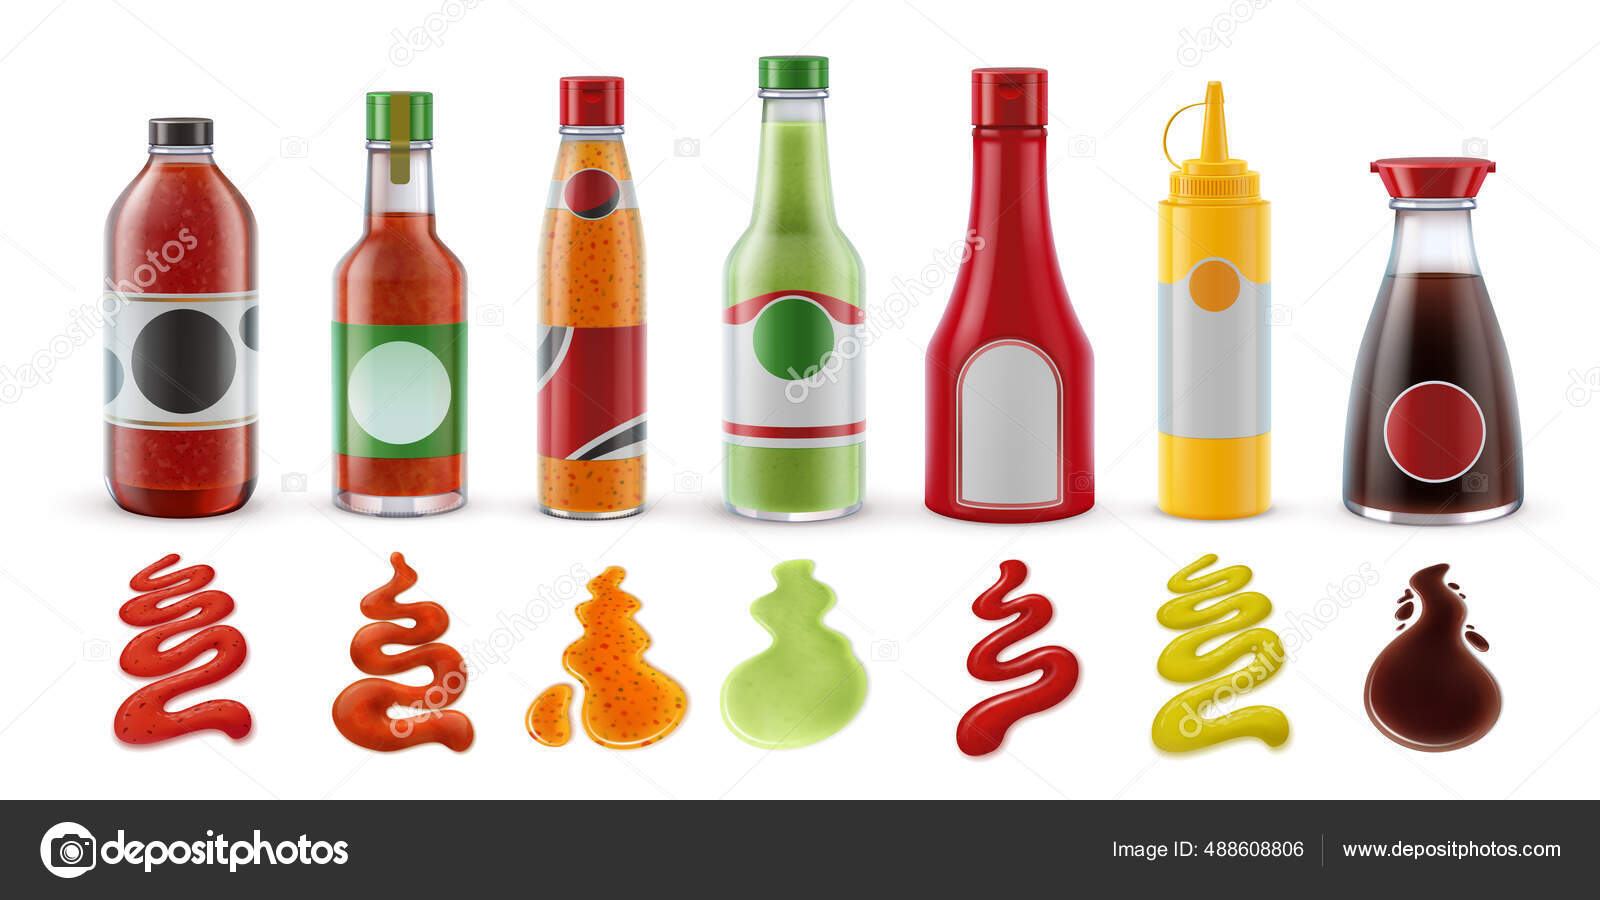 https://st2.depositphotos.com/16959514/48860/v/1600/depositphotos_488608806-stock-illustration-realistic-sauces-in-bottles-hot.jpg